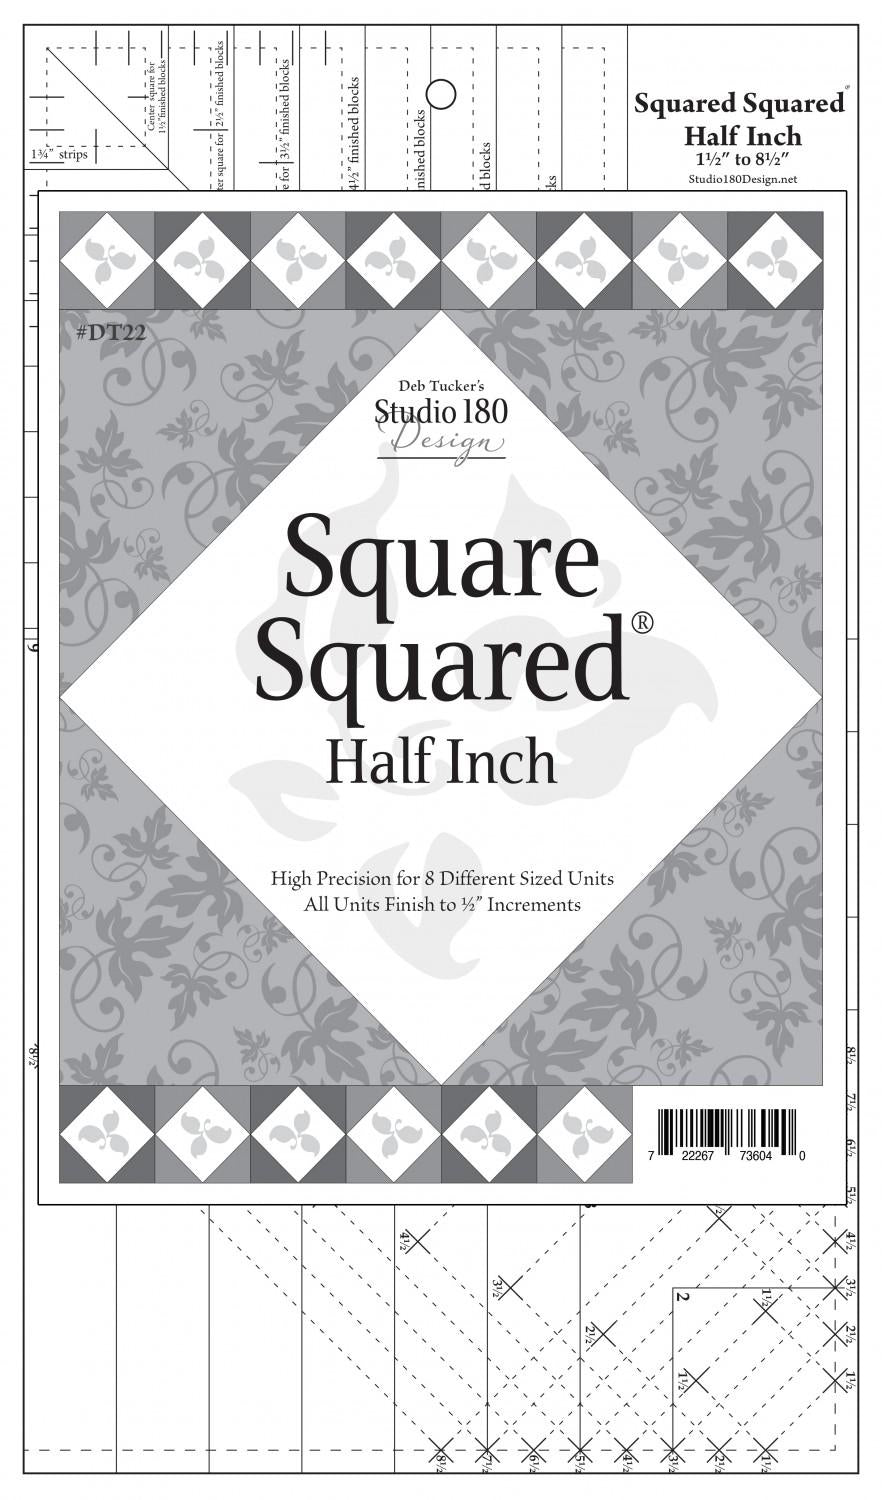 Square Squared: Half Inch - DT22